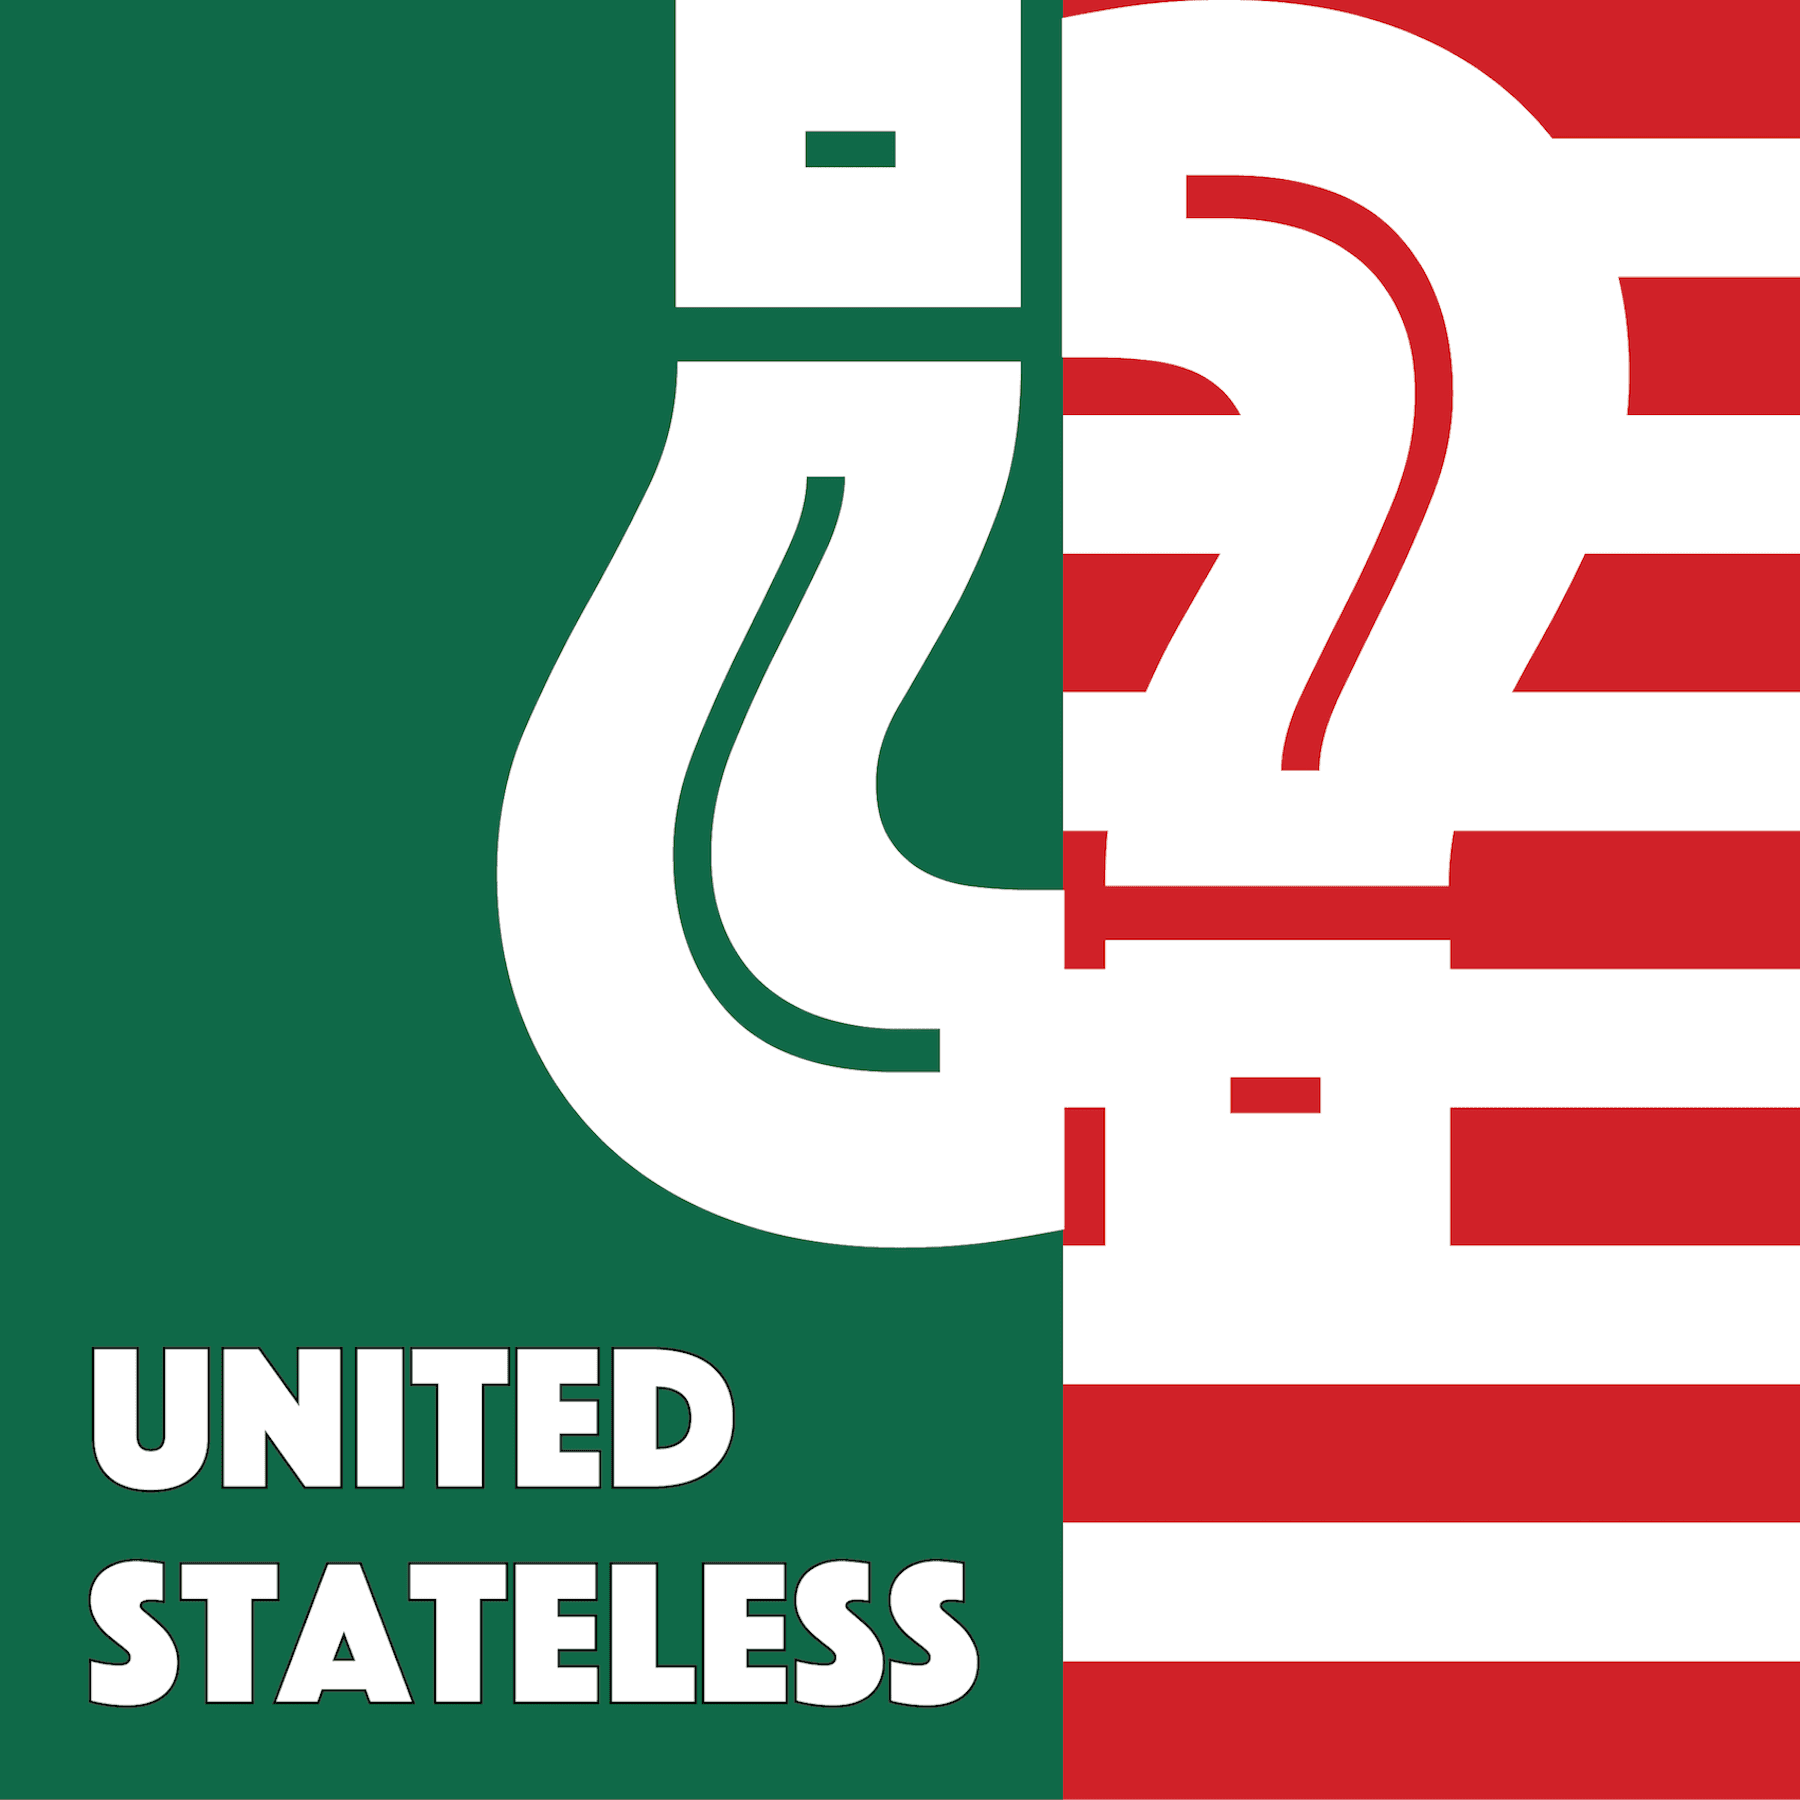 Thumbnail for "United Stateless Podcast".